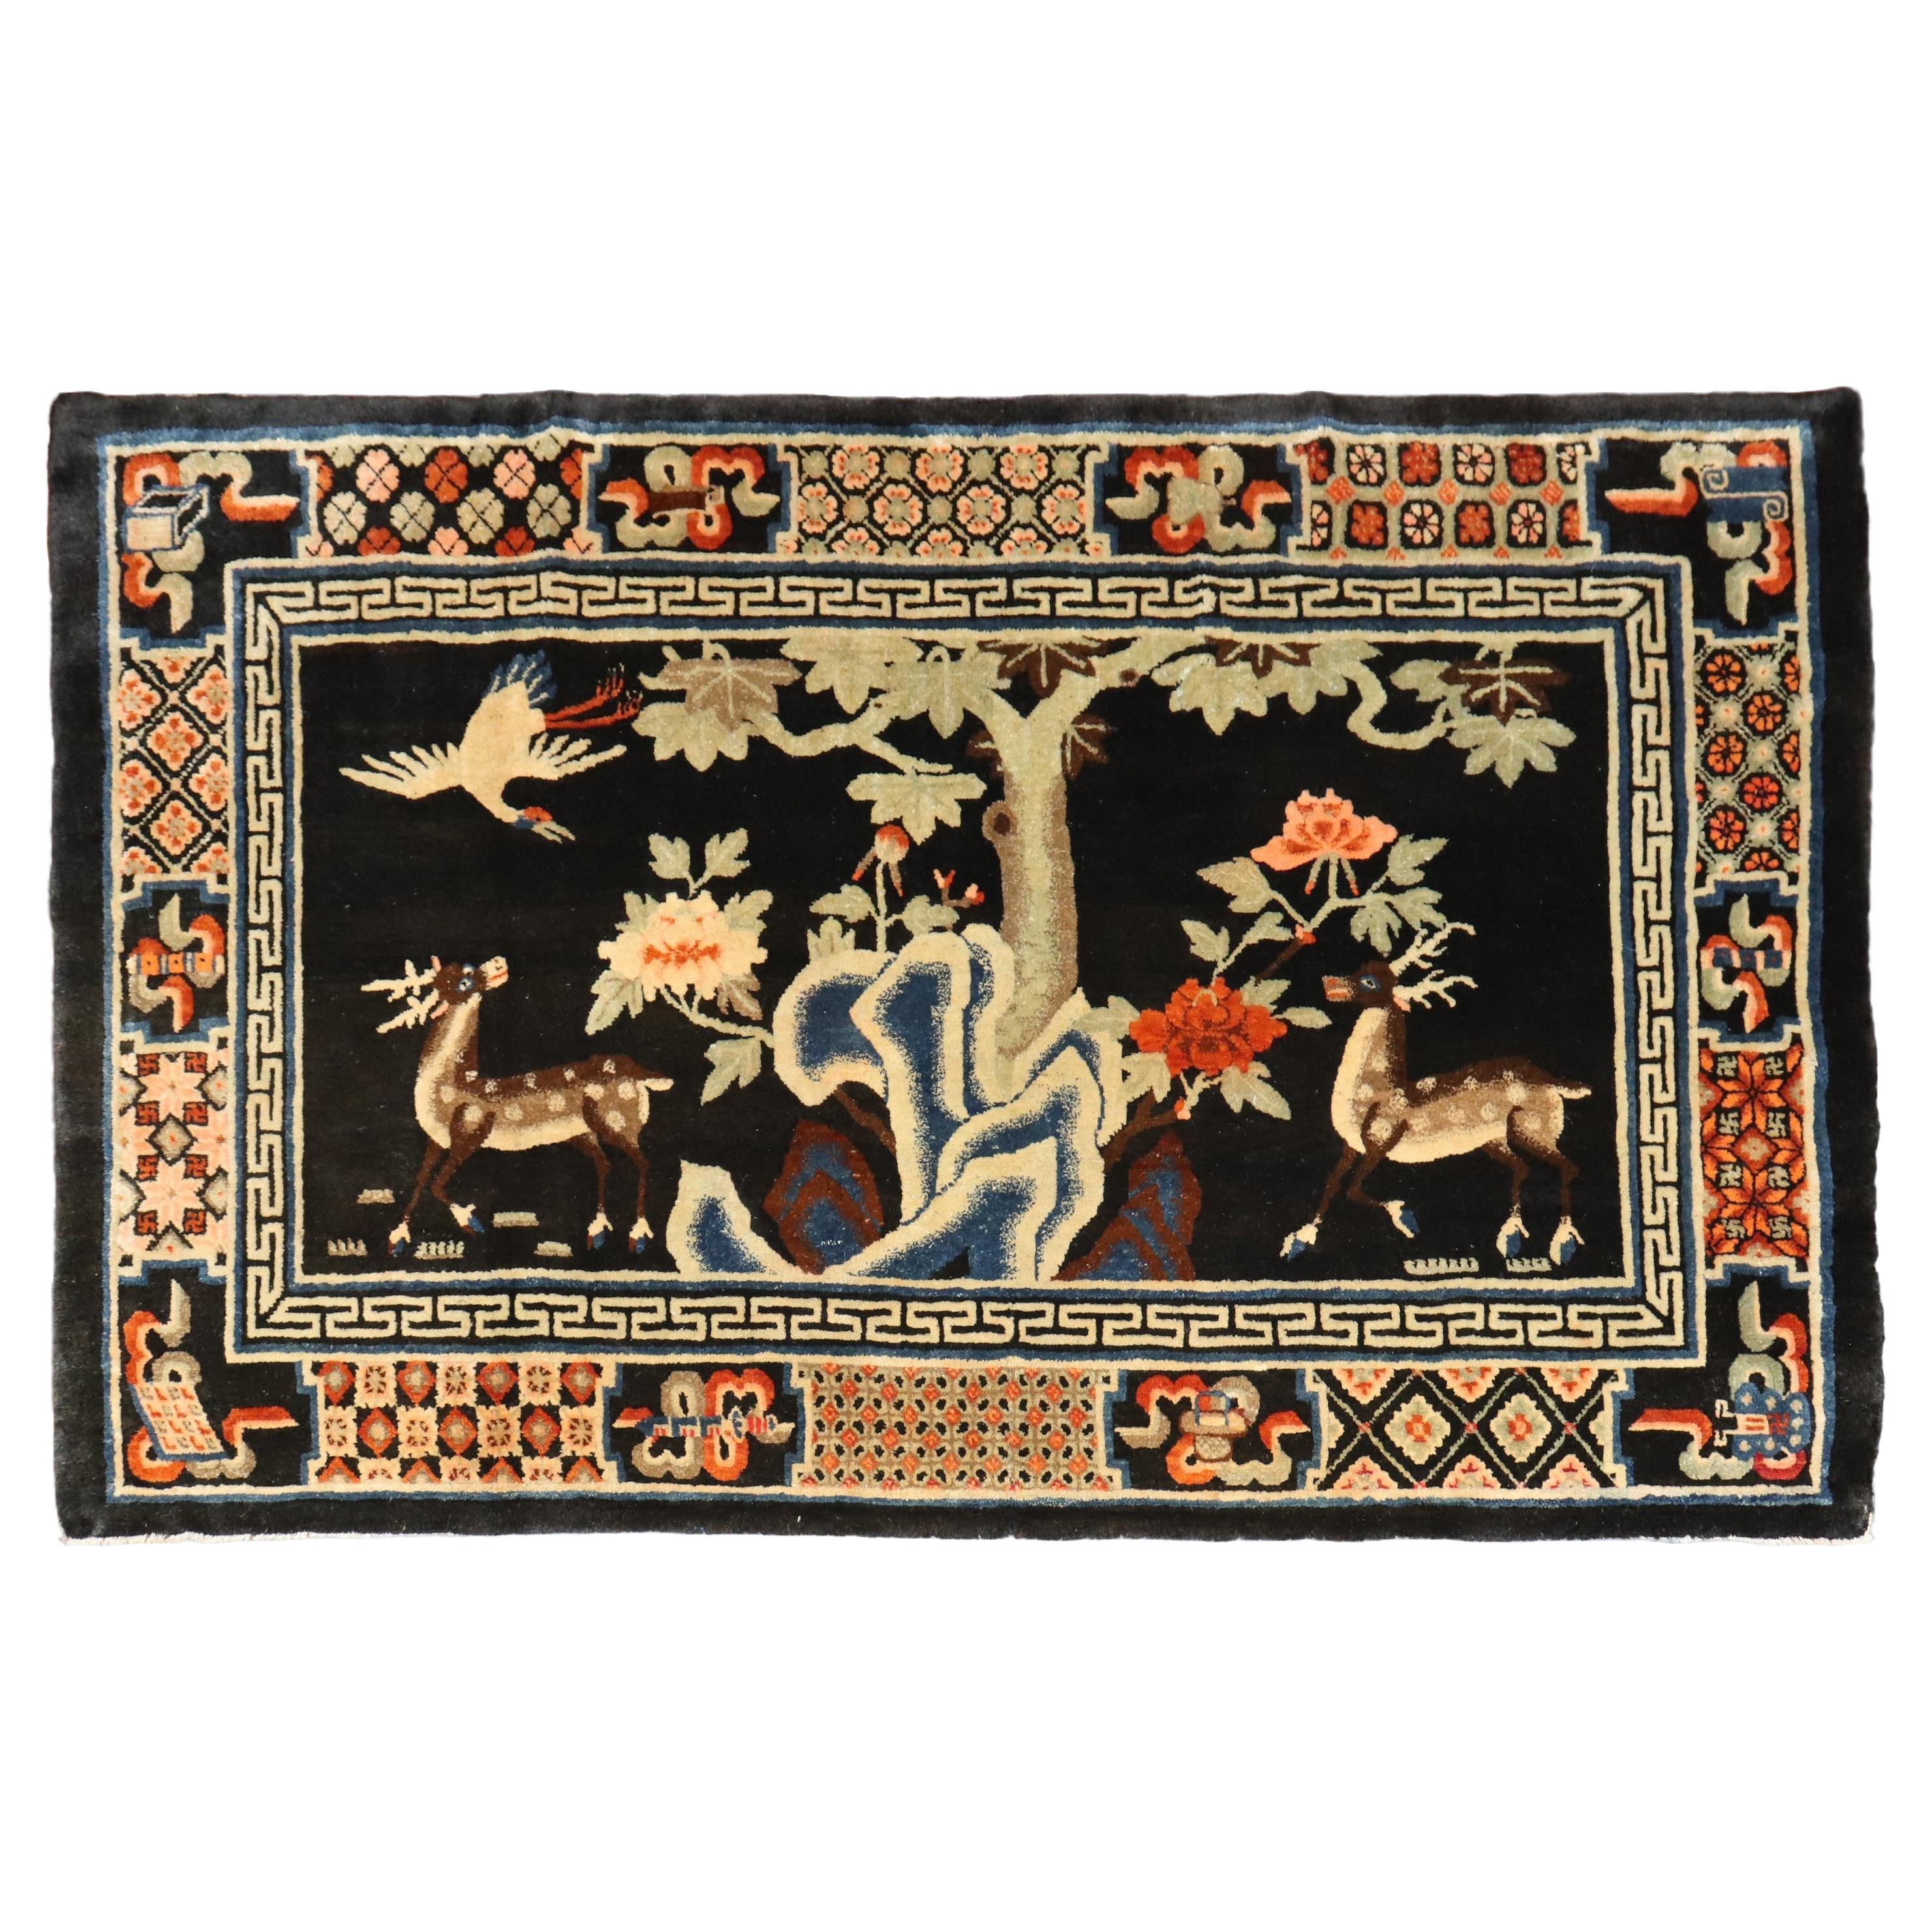 Zabihi Collection Chinese Batou Pictorial Rug